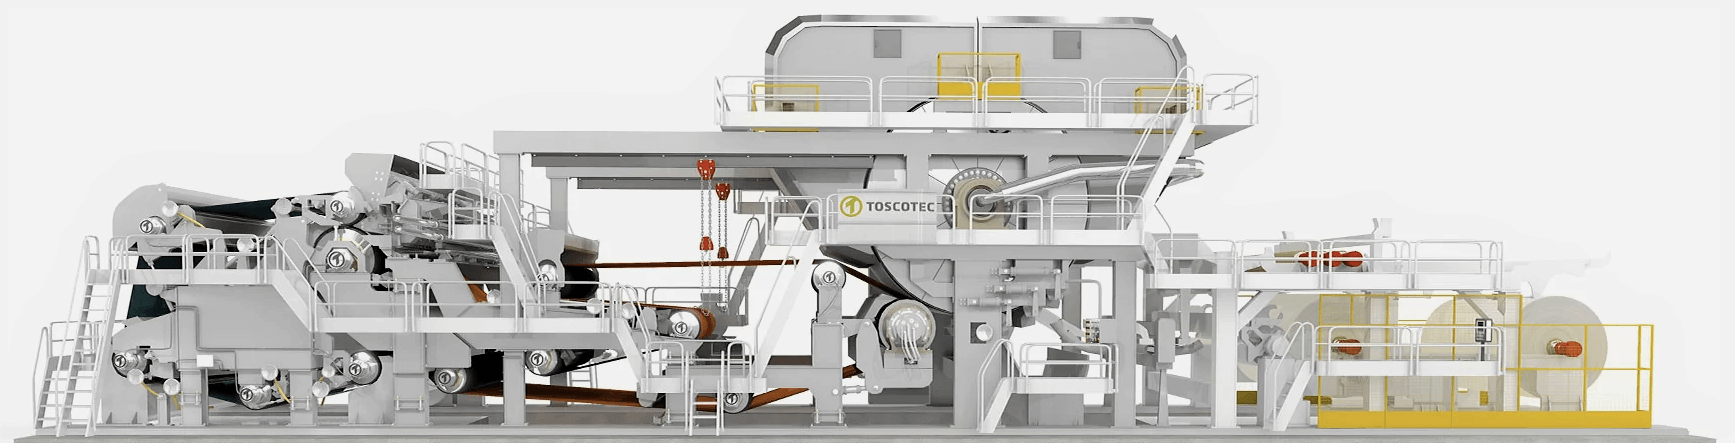 Rendering macchinario Toscotec per produzione bobina carta vergine